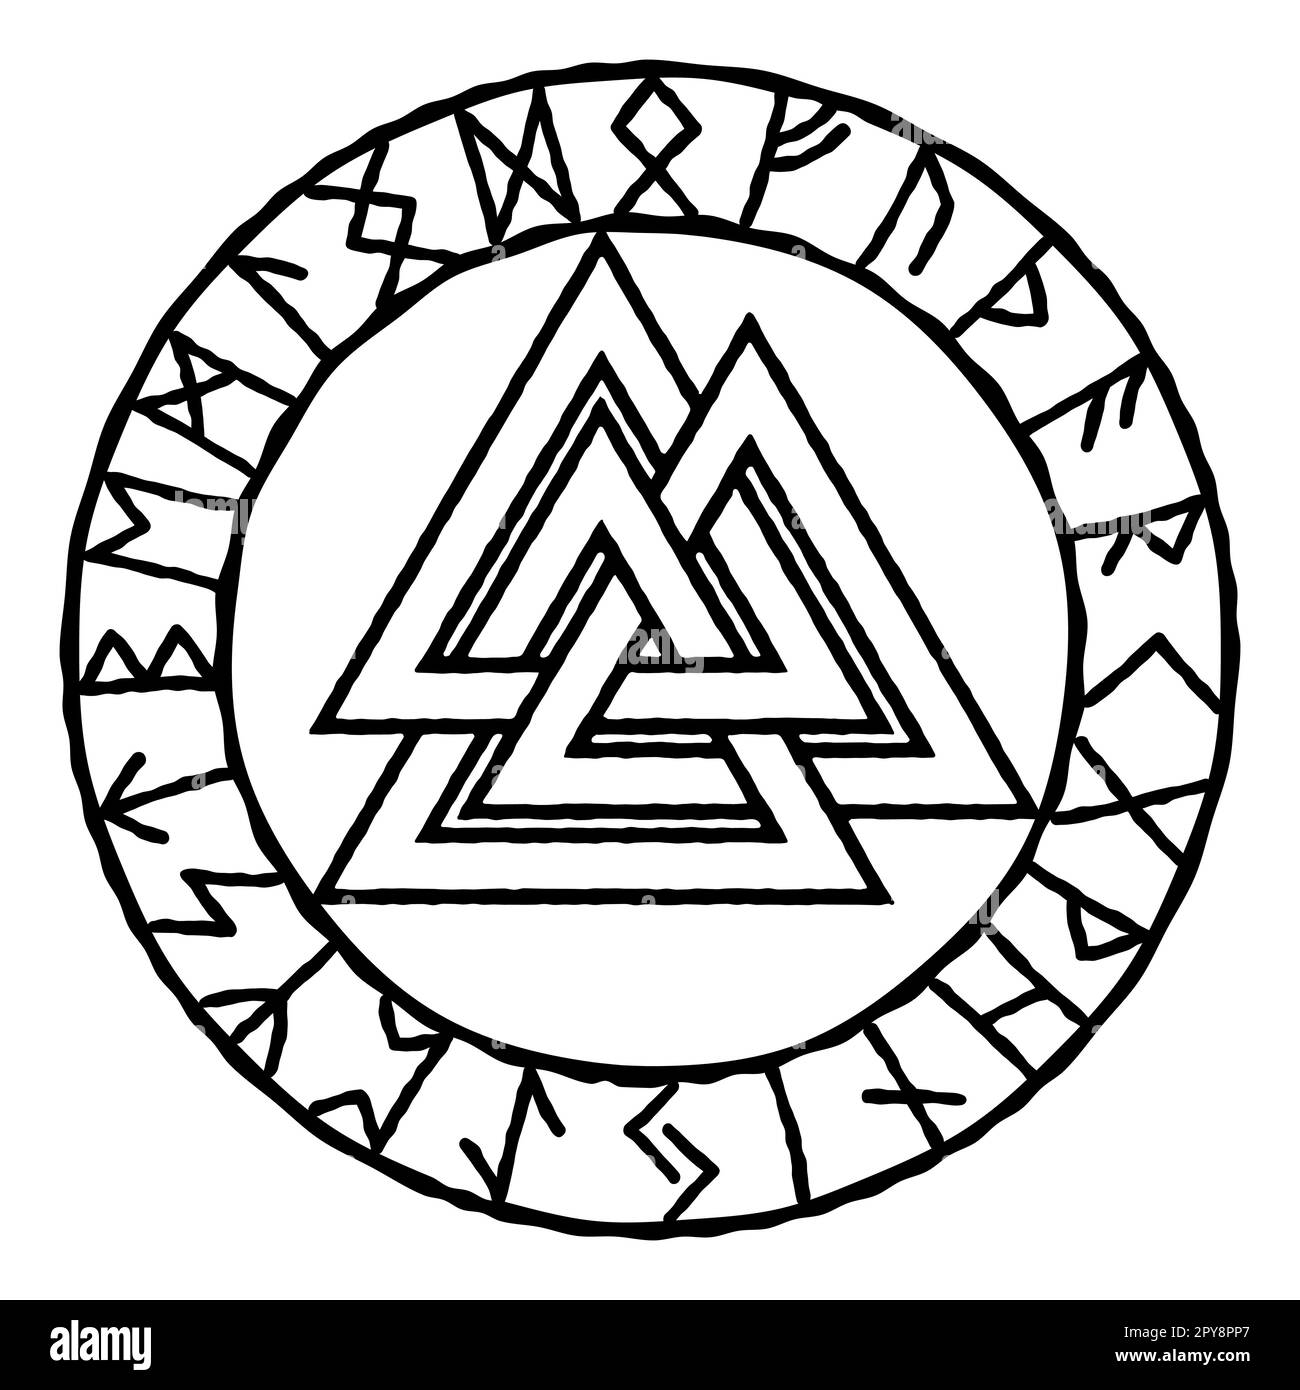 Valknut ancient Scandinavian symbol sign knot of fallen warriors, sign of Odin in a ring of runes. Vector illustration. Stock Vector